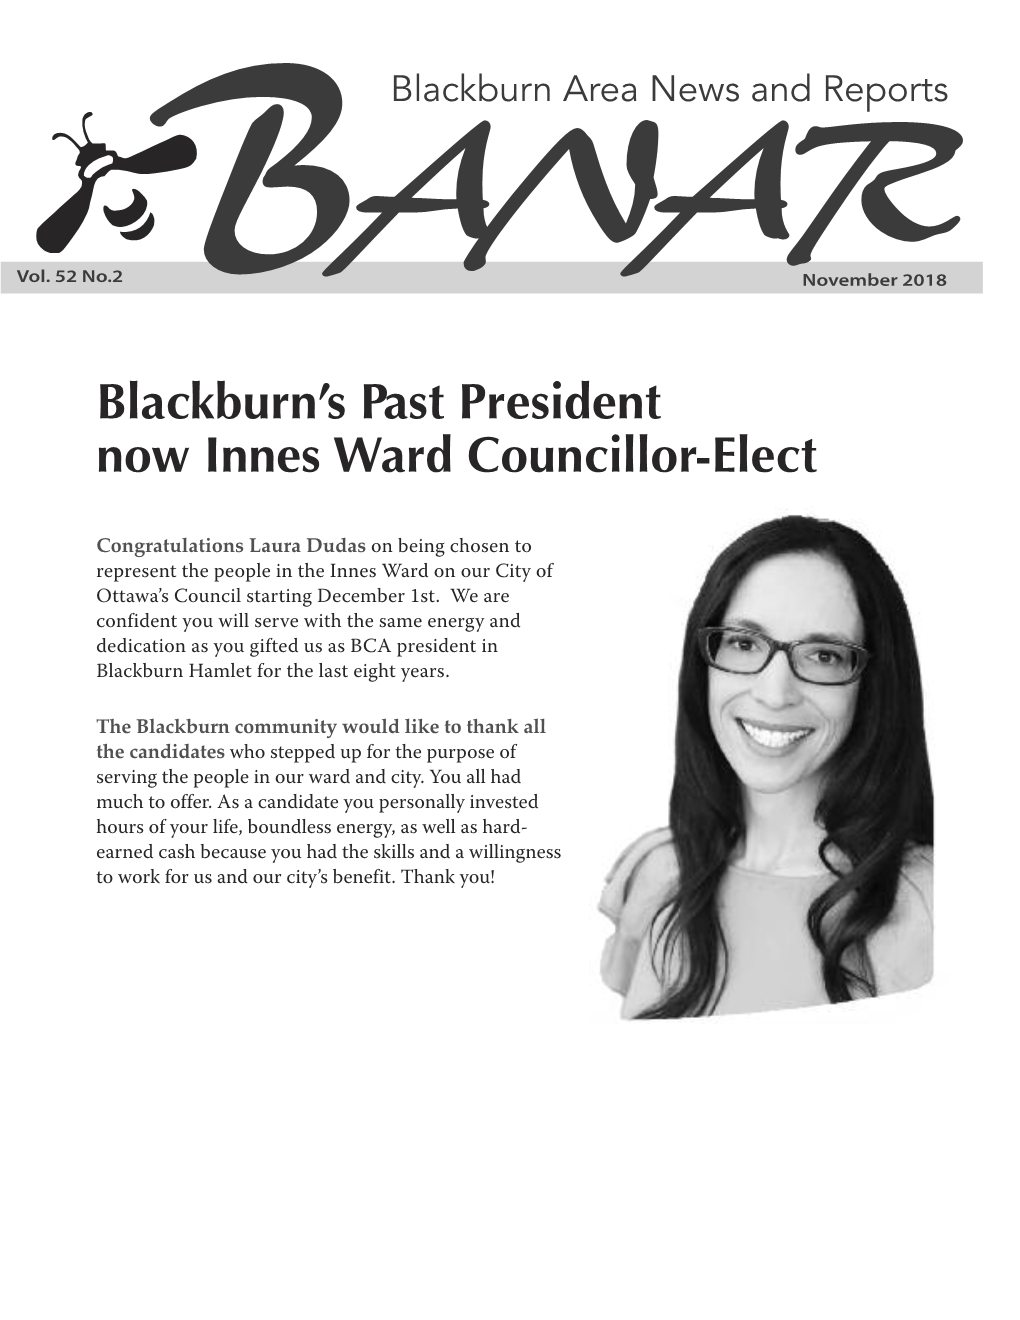 Blackburn's Past President Now Innes Ward Councillor-Elect